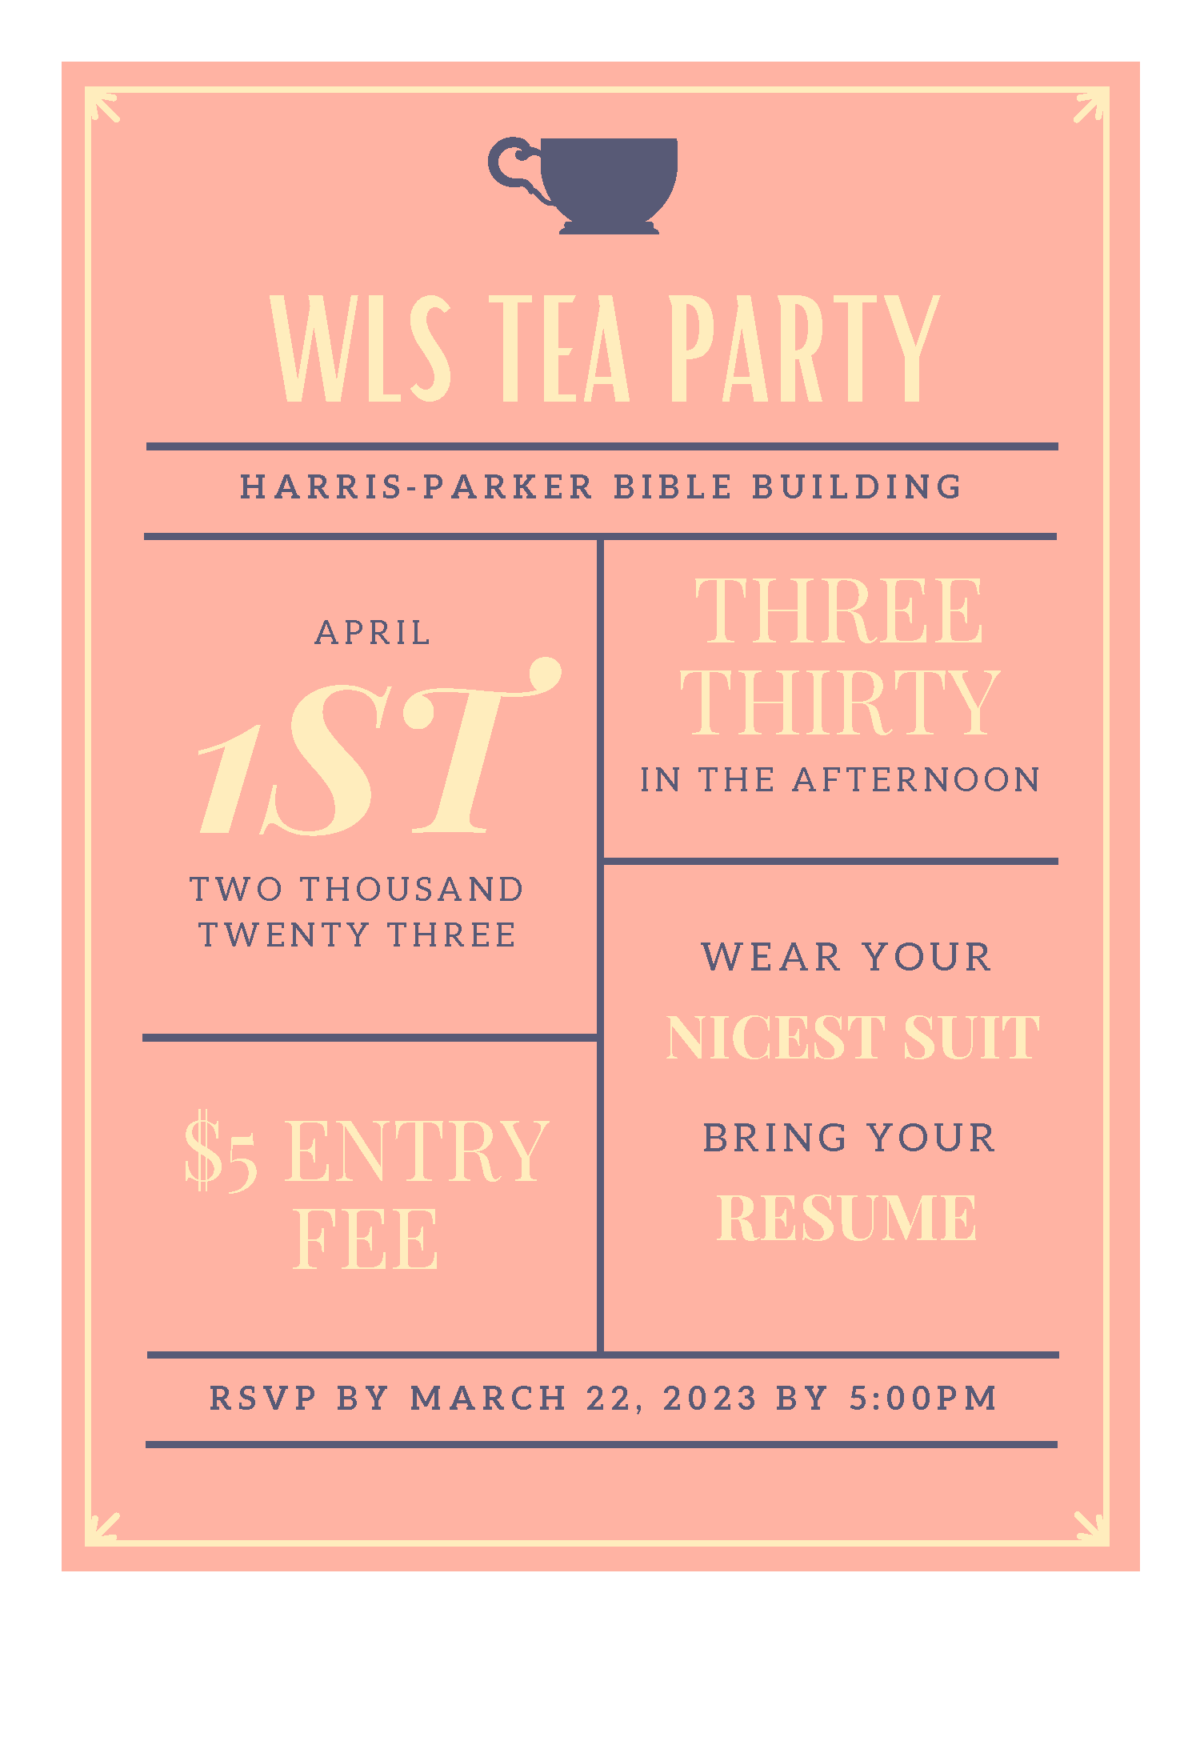 Women's Legal Society Tea Party Flyer